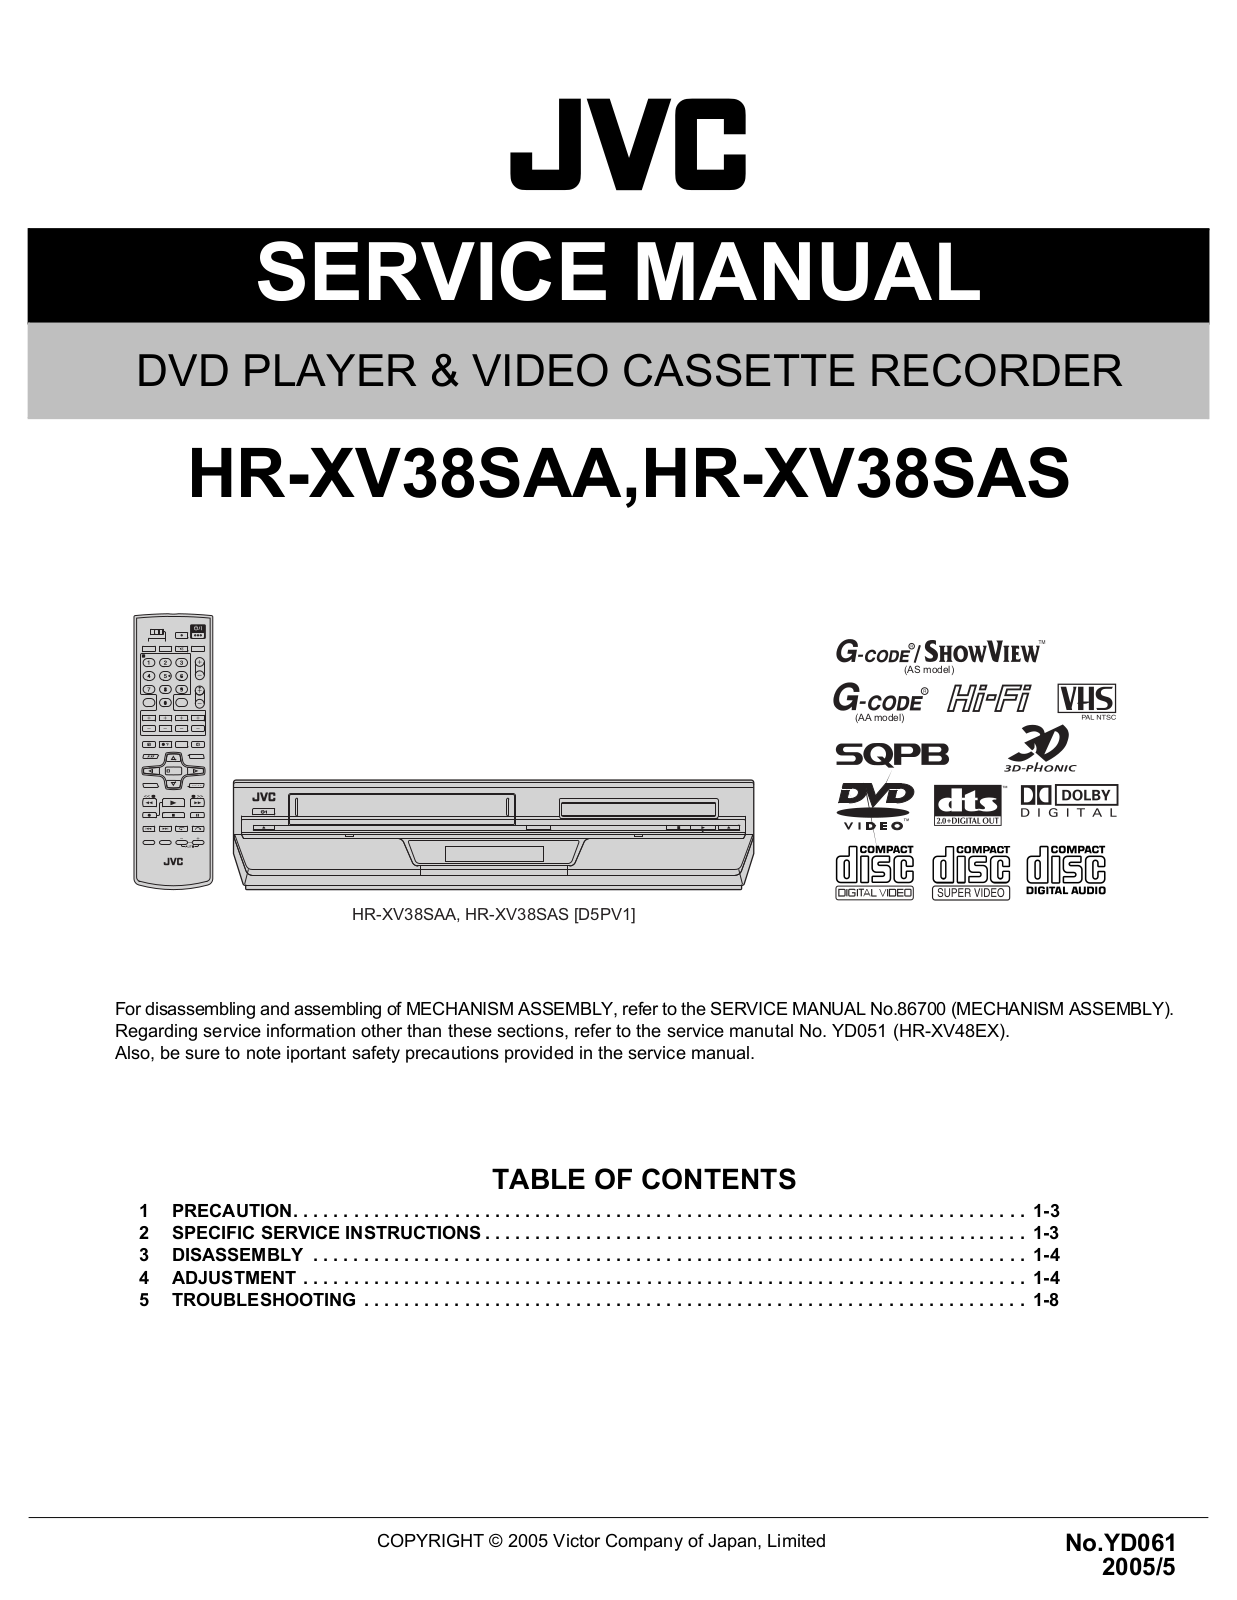 Jvc HR-XV38-SAS, HR-XV38-SAA Service Manual